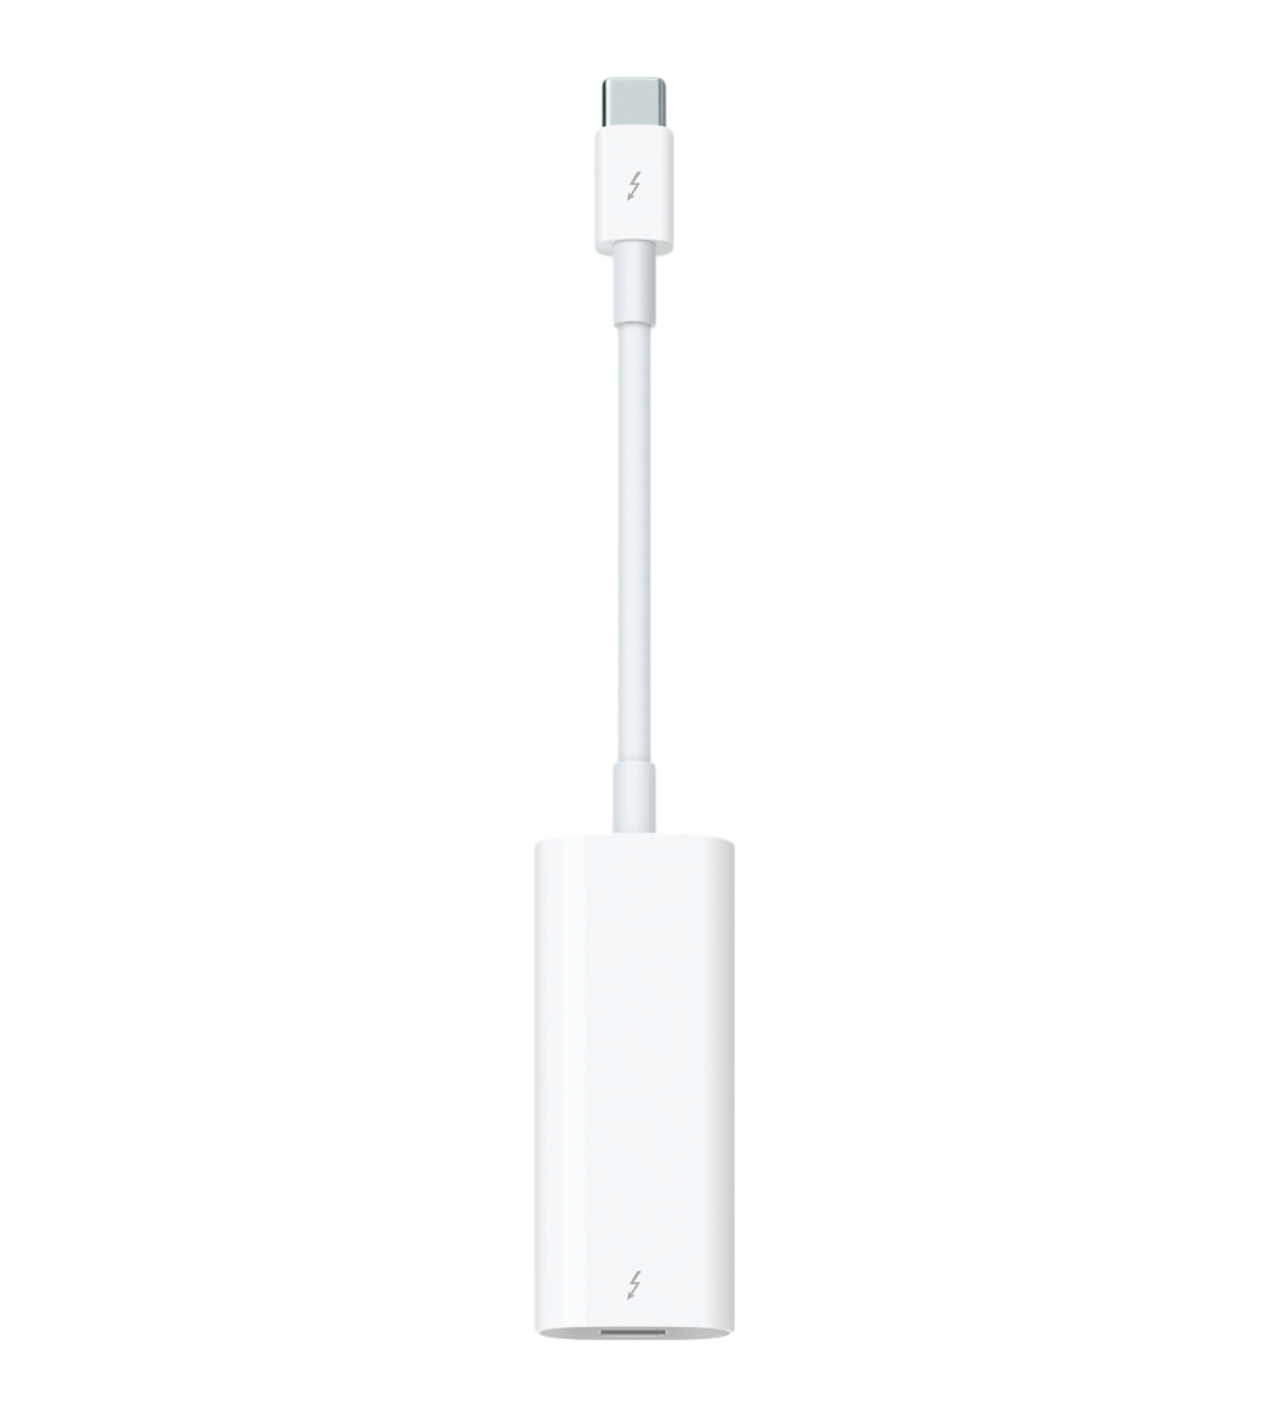 Адаптер Apple Thunderbolt 3 USB-C to Thunderbolt 2